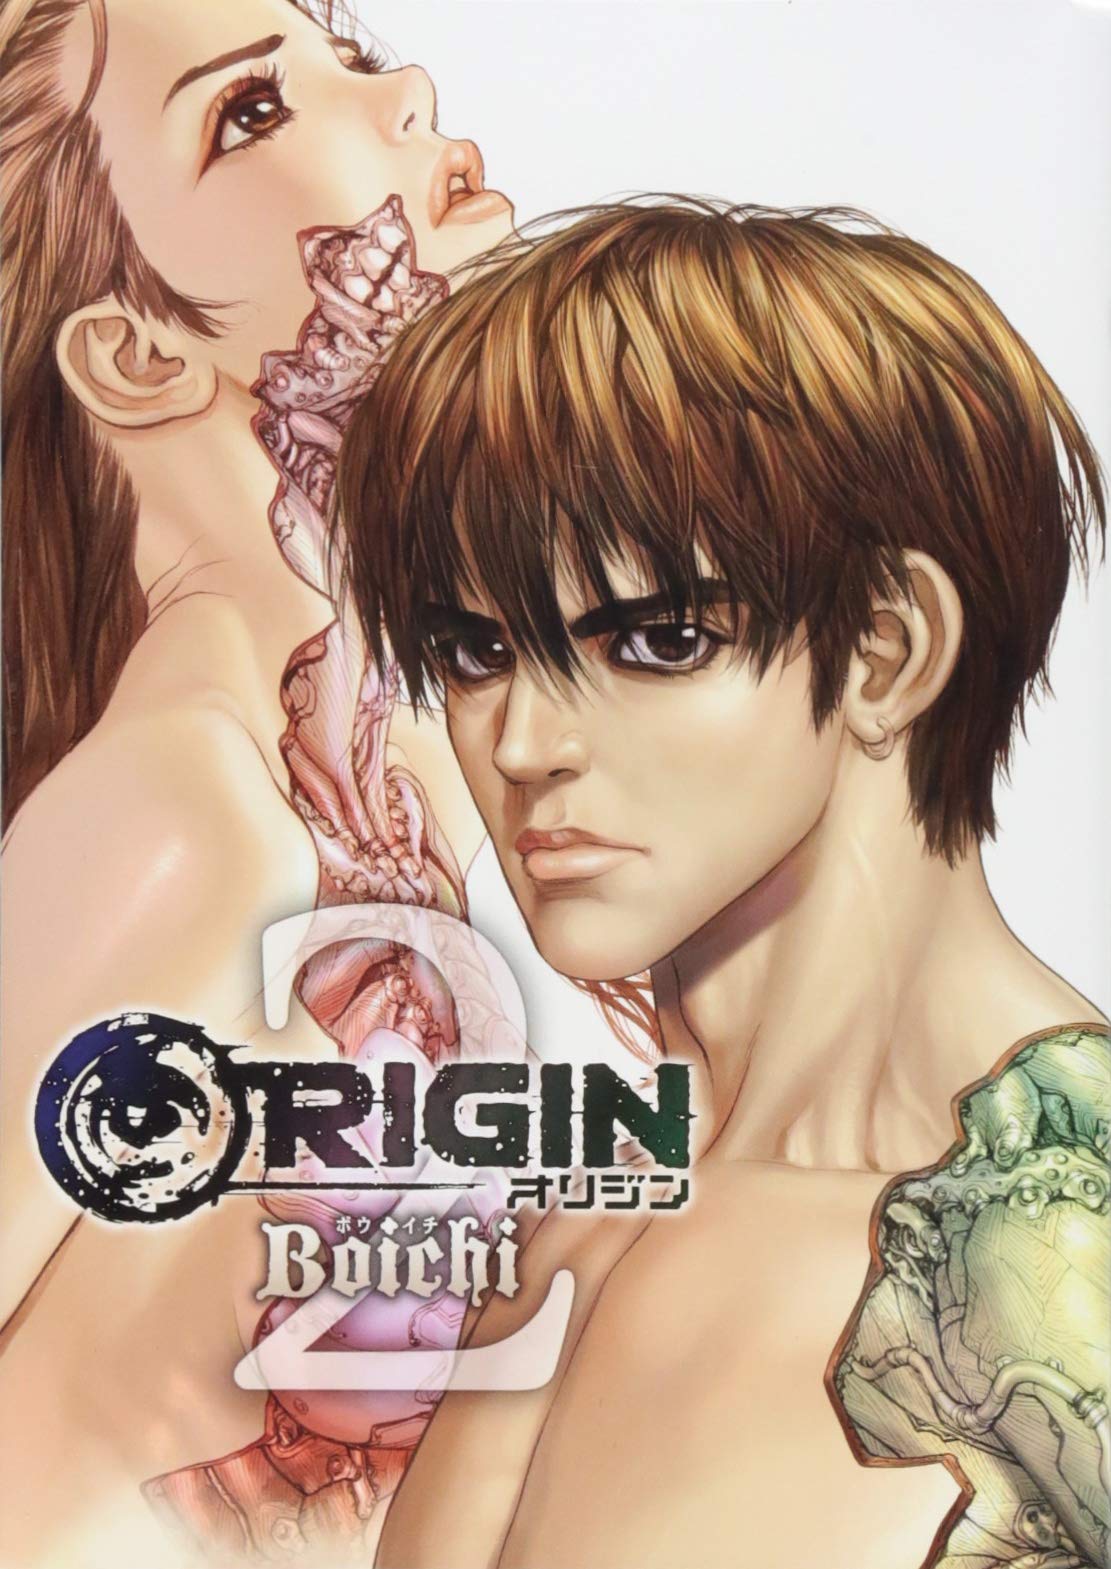 ORIGIN (Manga) Vol. 2